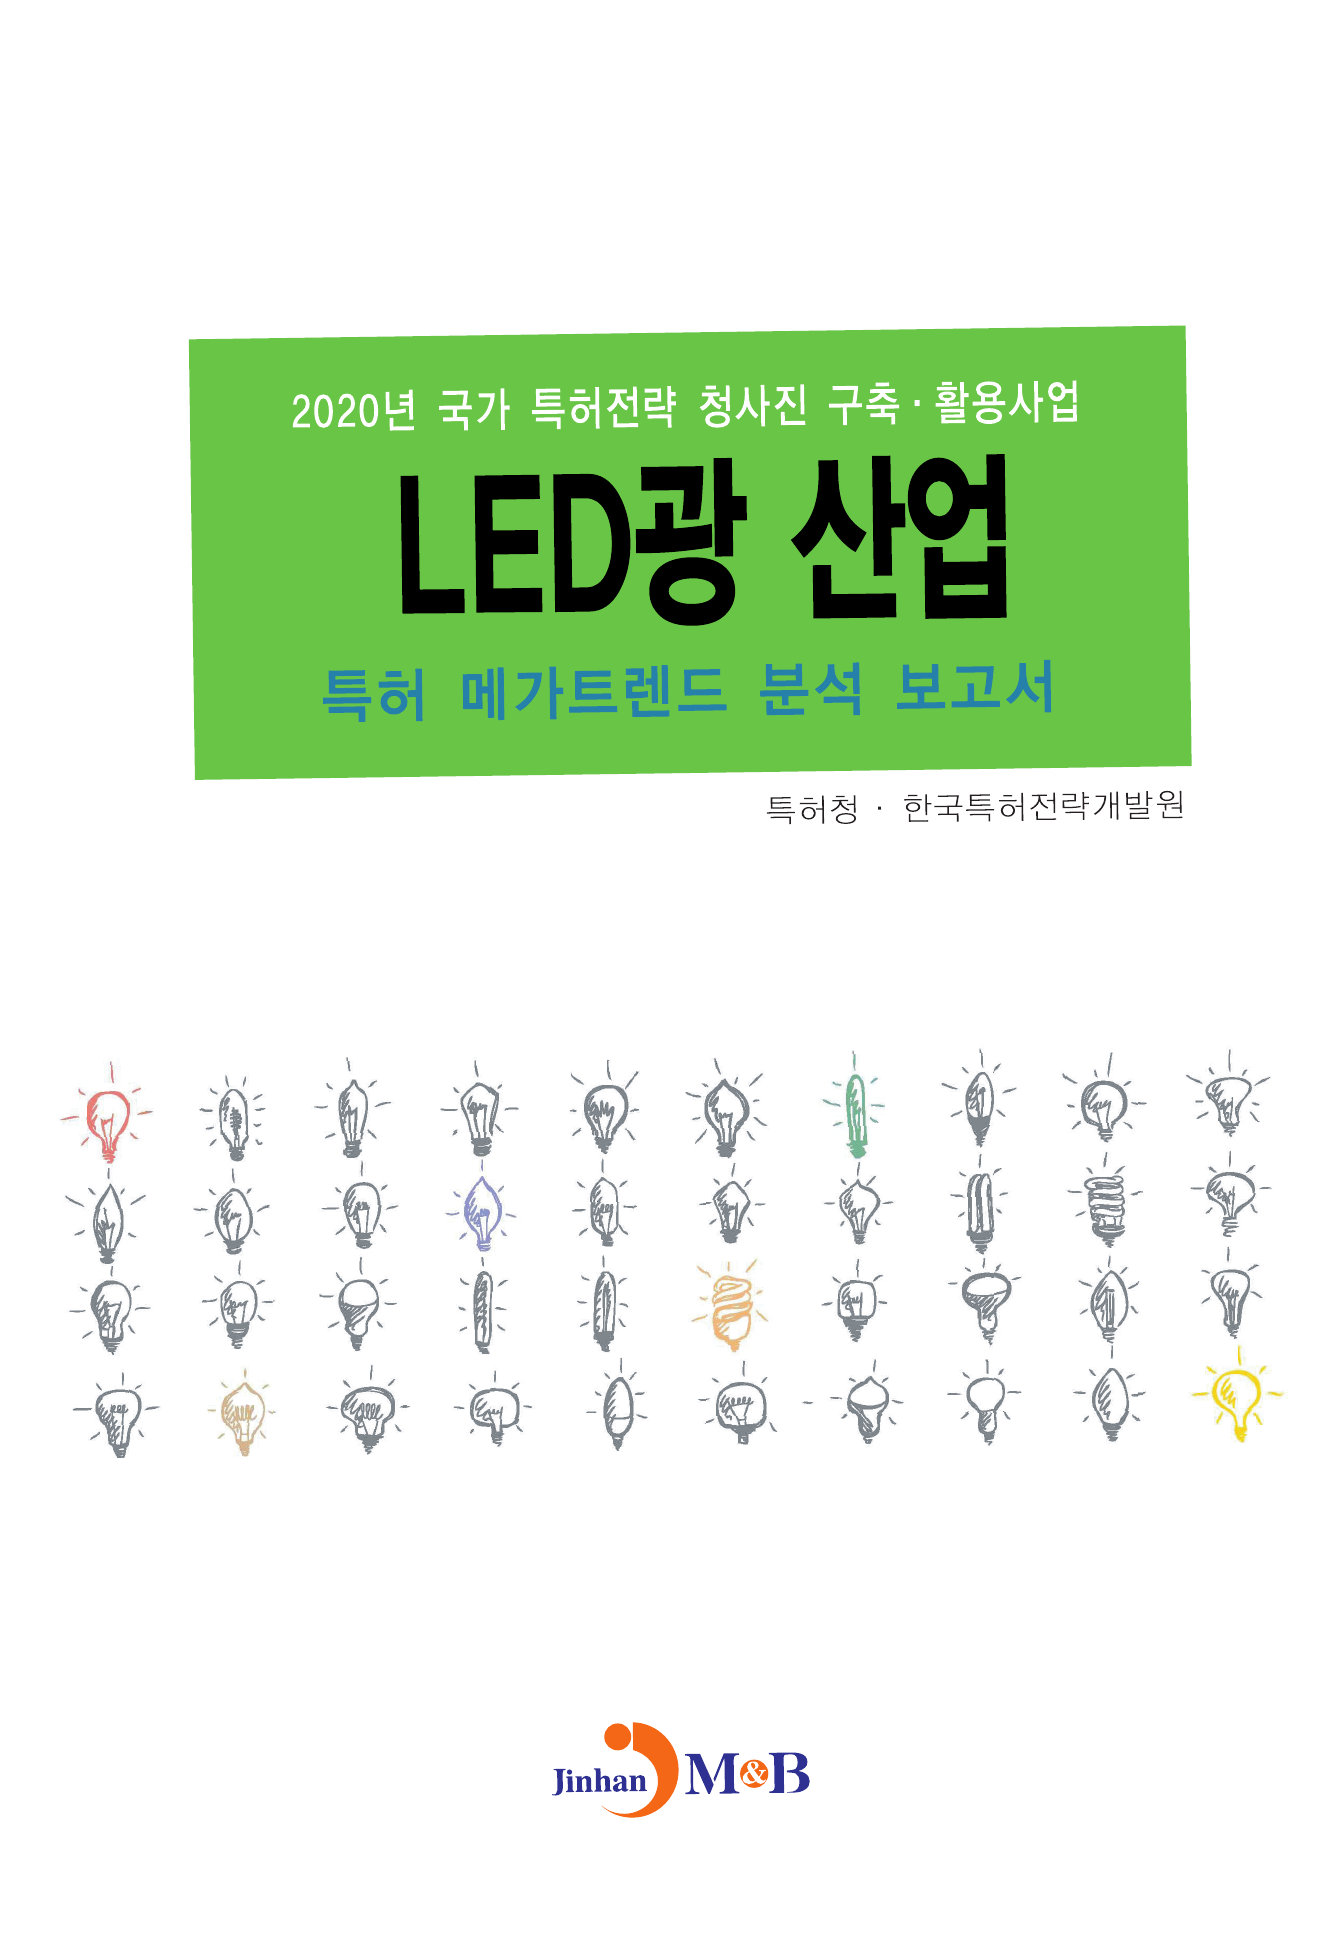 LED광 산업 특허 메가트렌드 분석 보고서(2020)